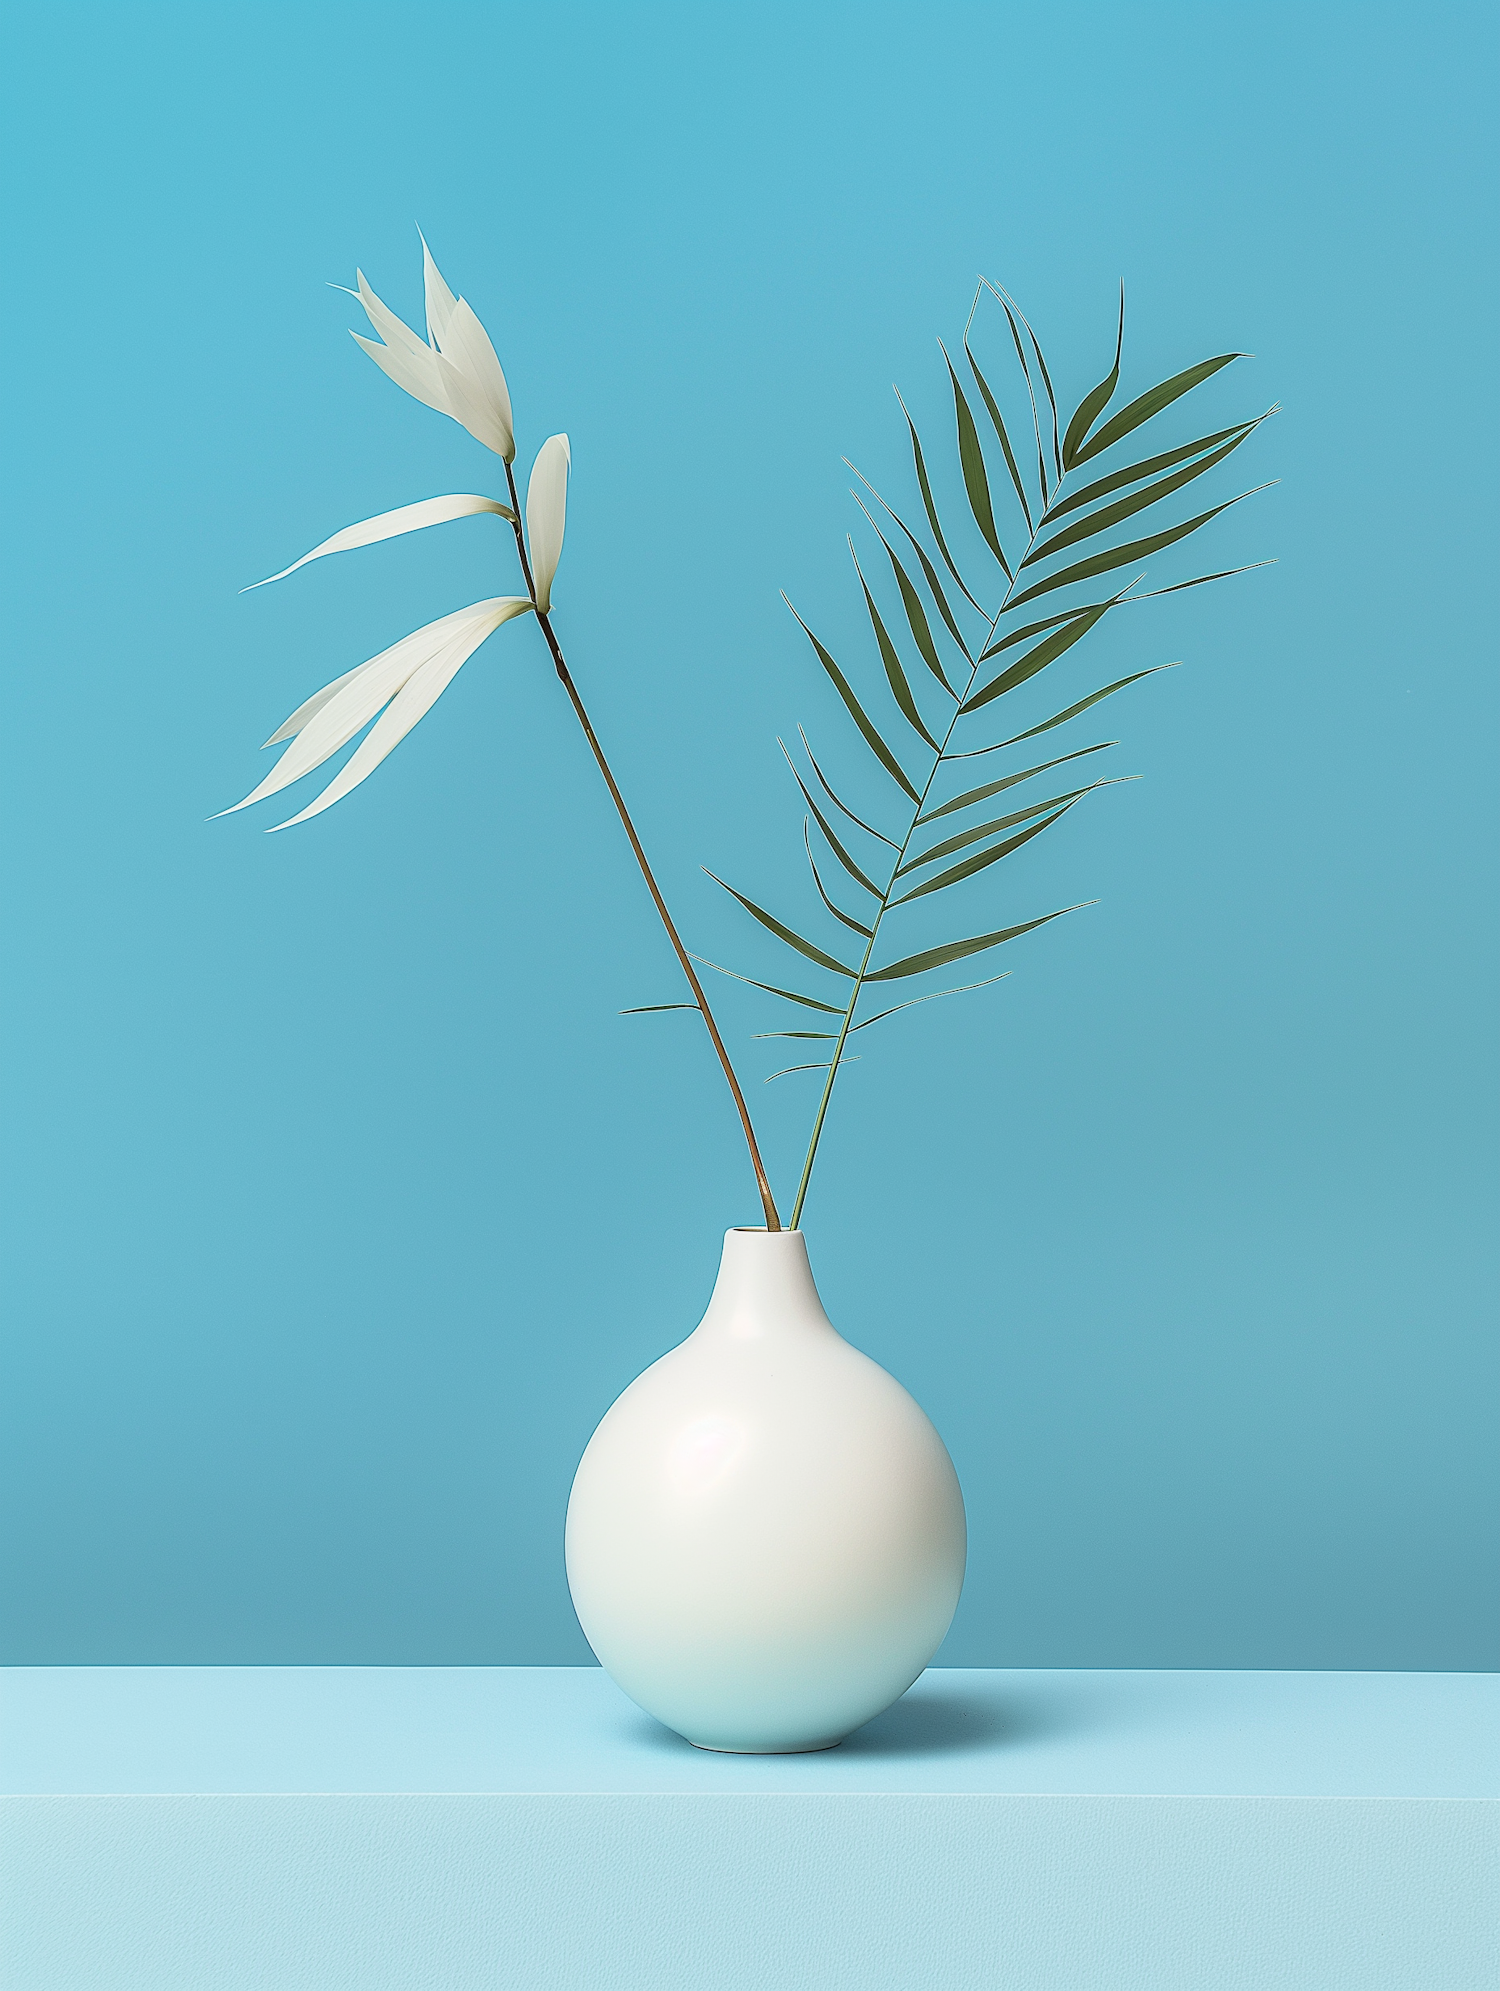 Minimalist Still Life with Vase and Foliage